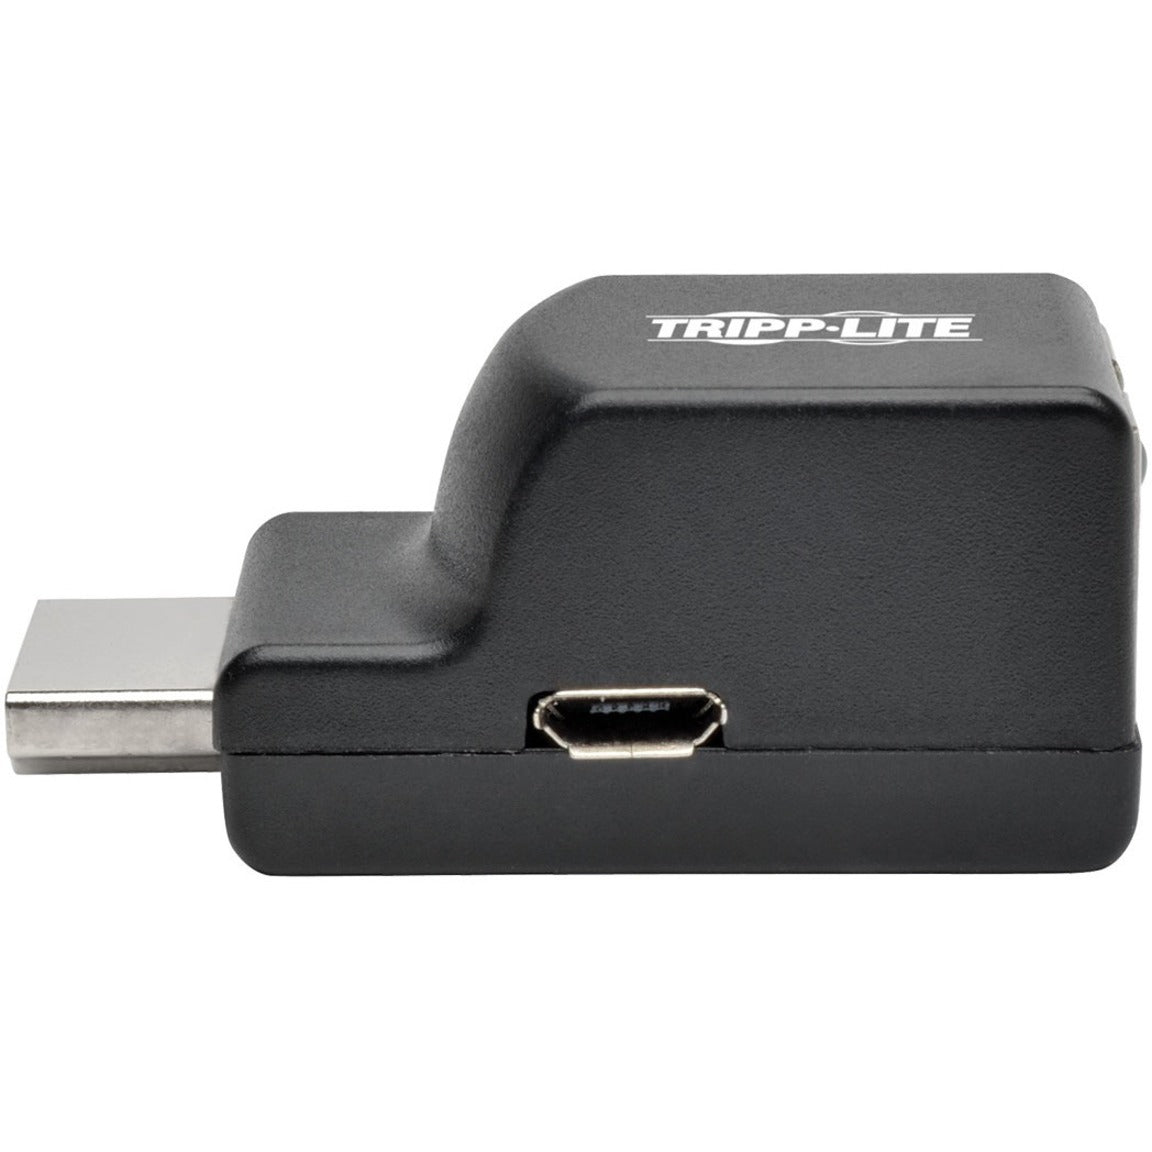 Tripp Lite B126-1P0-MINI HDMI über Cat5e/Cat6 passiven Extender Low-Profile Remote Receiver für Full-HD-Video 1920 x 1080 Auflösung 1 Jahr Garantie